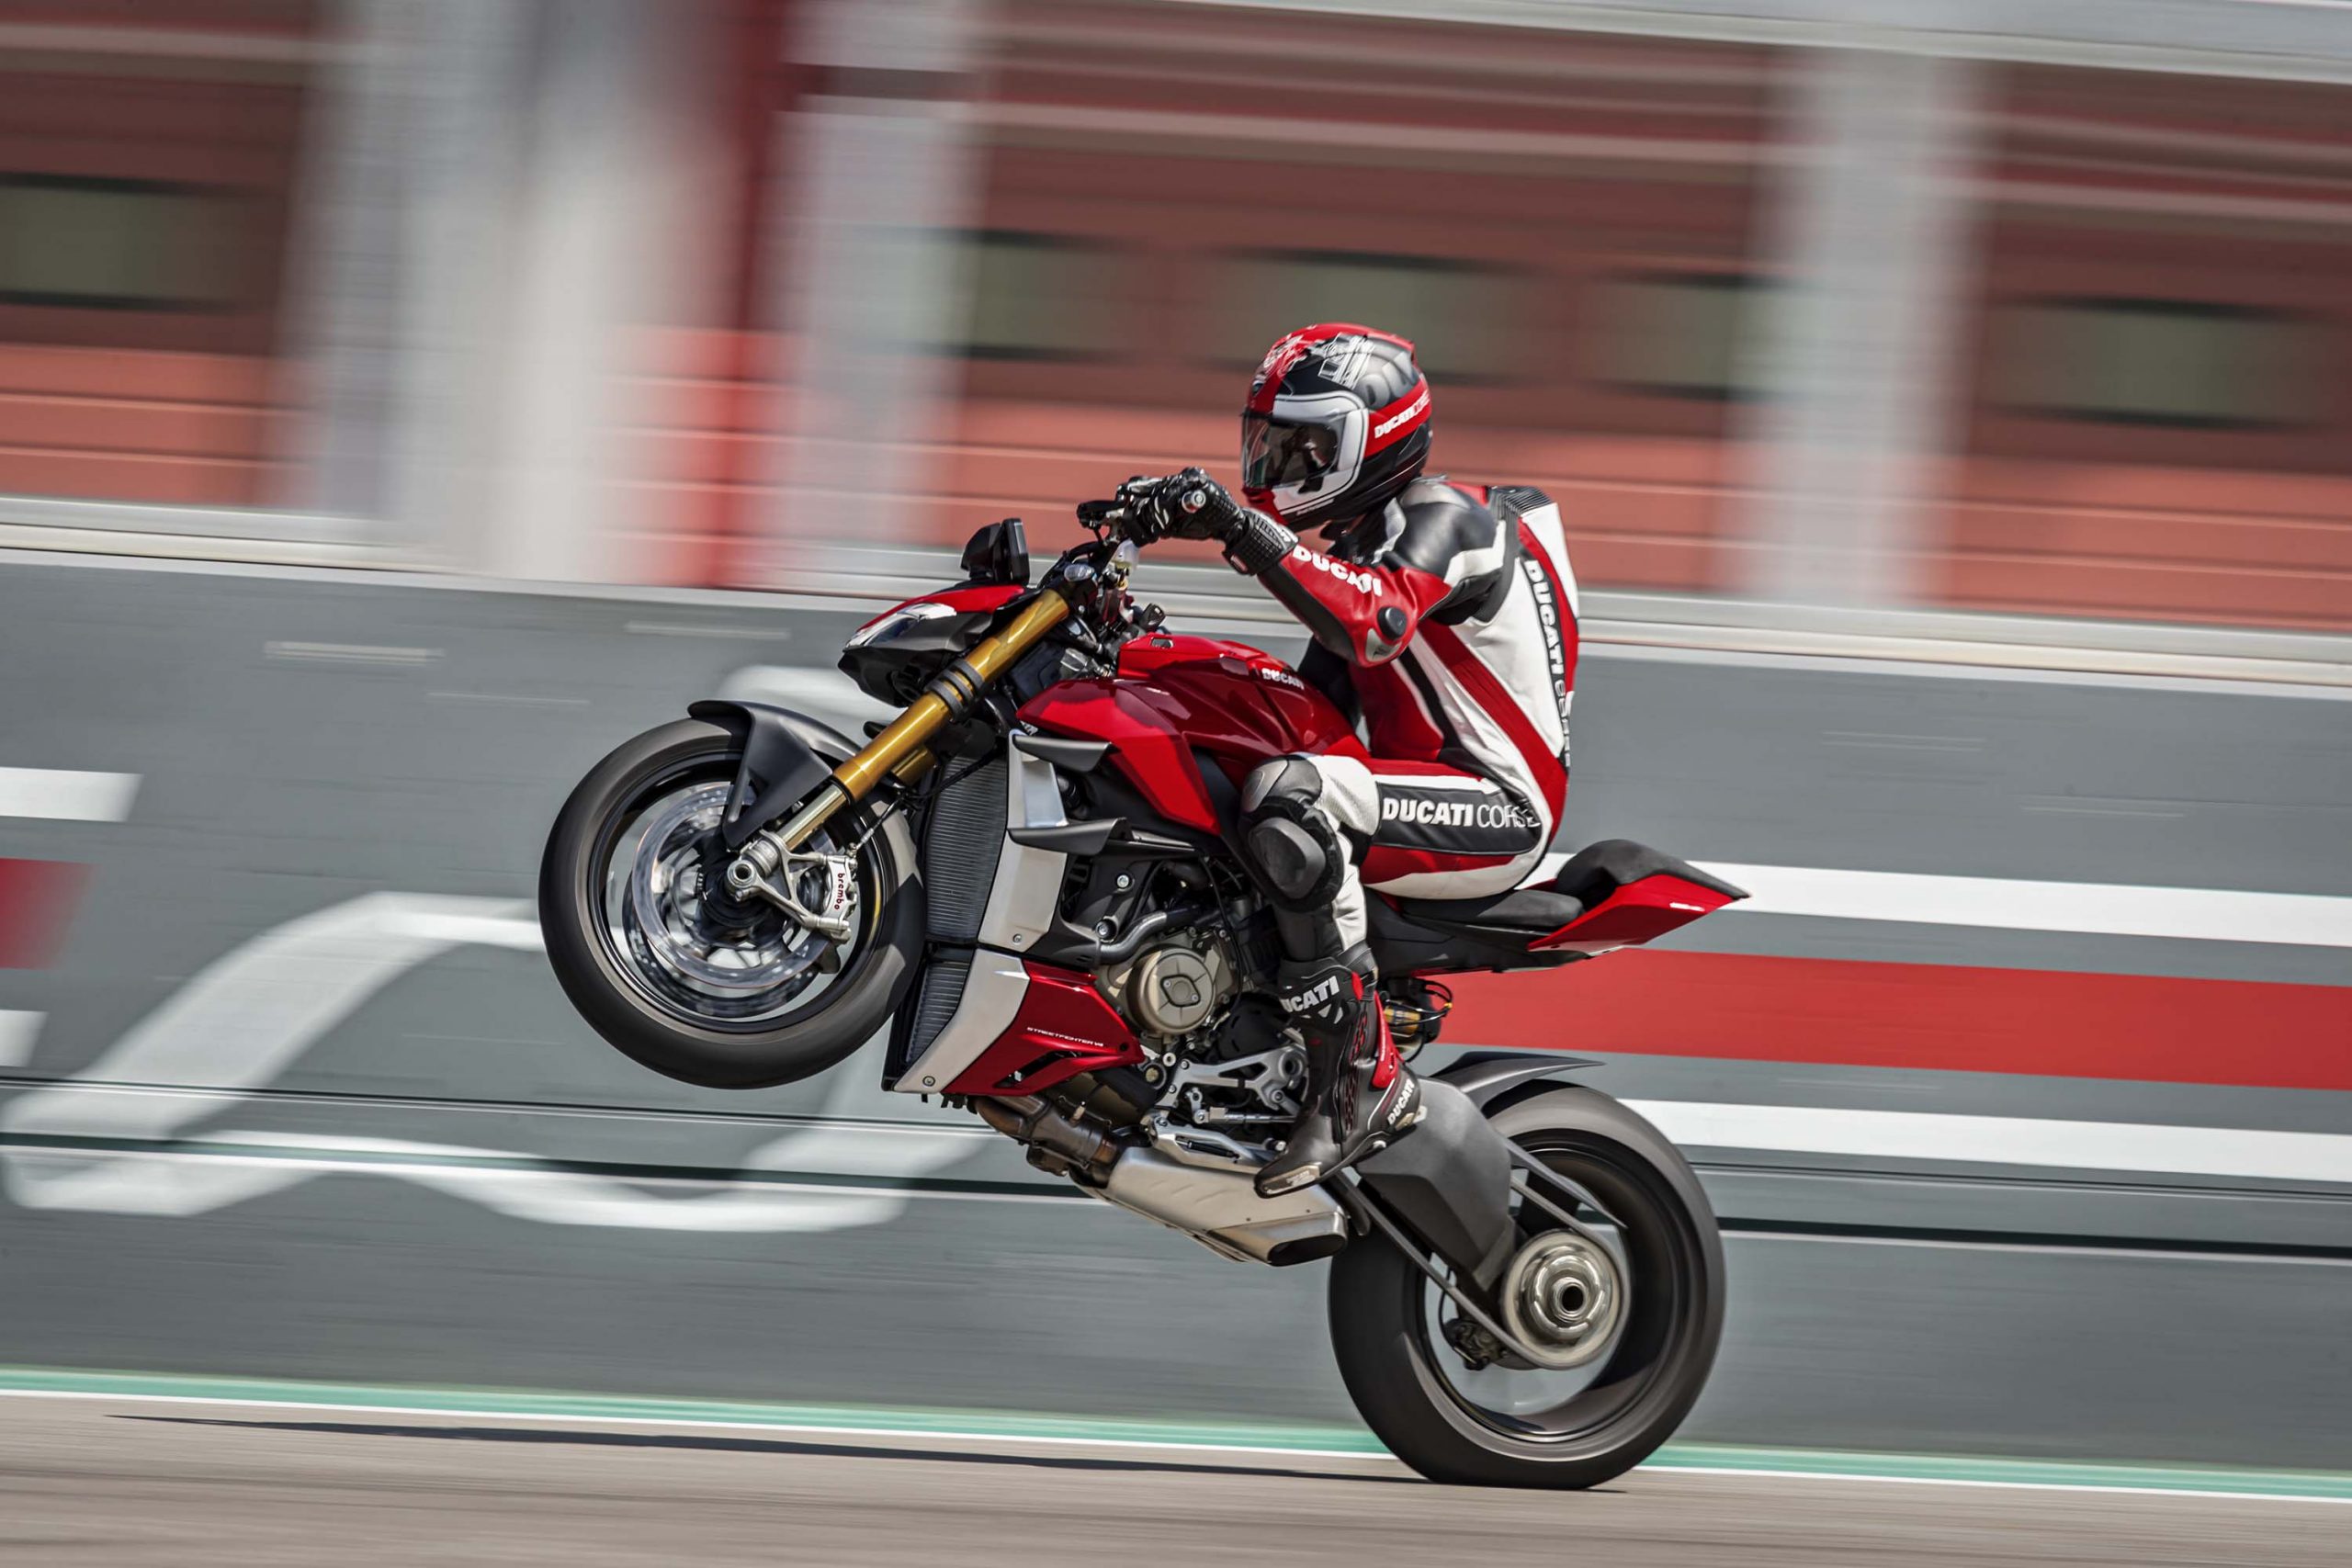 Even More Photos of the Ducati Streetfighter V4 Asphalt Rubber